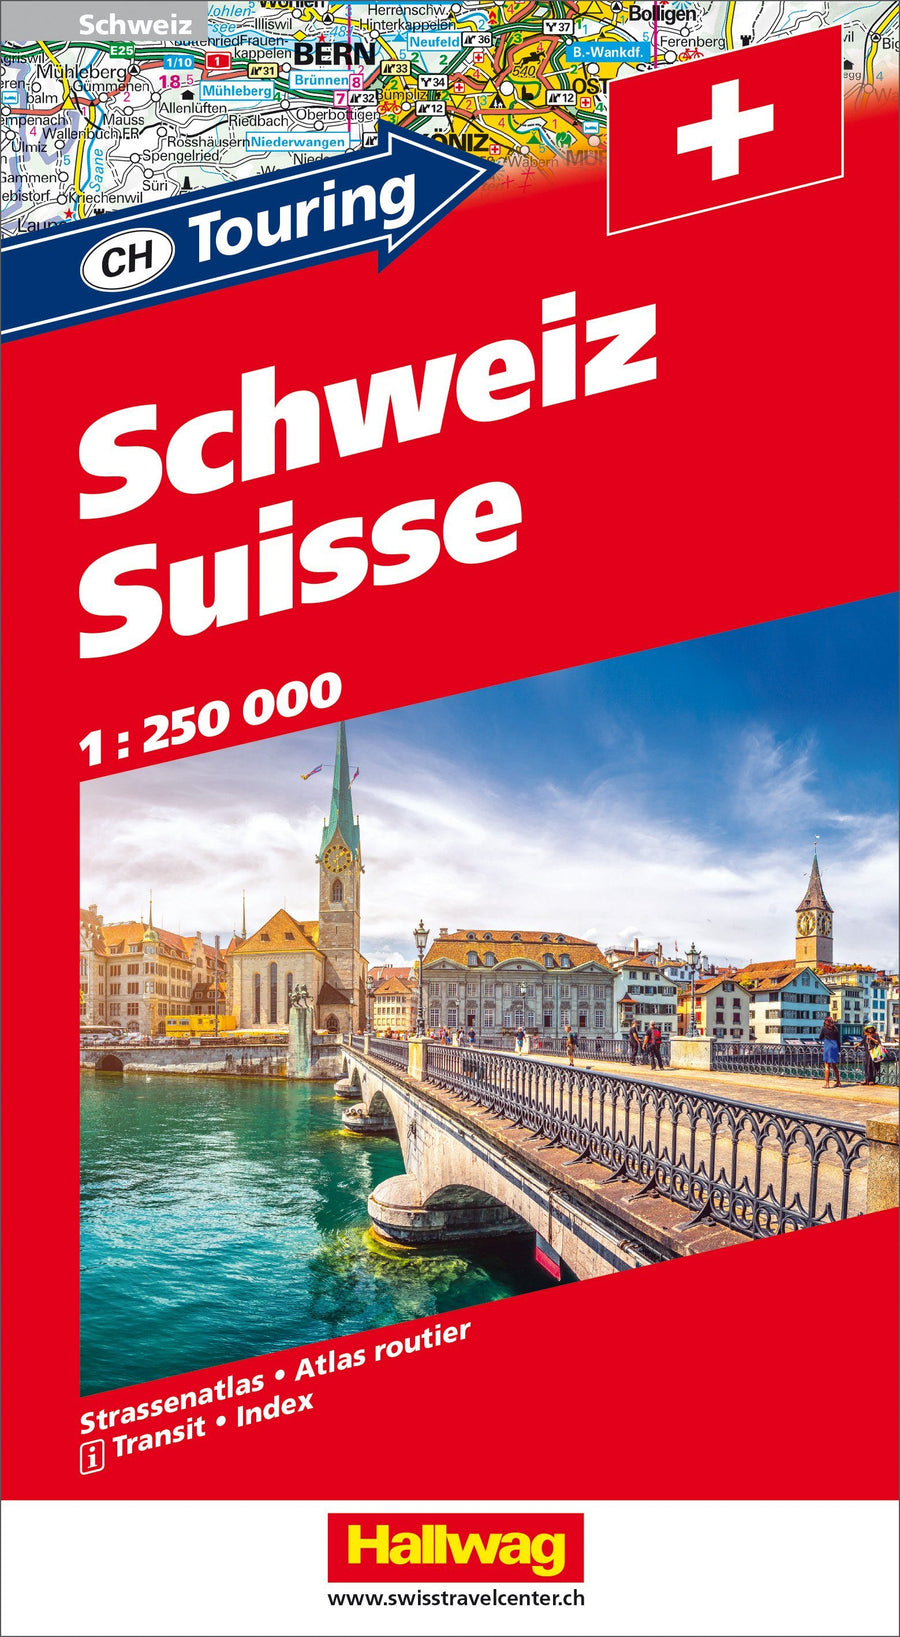 Atlas routier - Suisse | Hallwag atlas Hallwag 